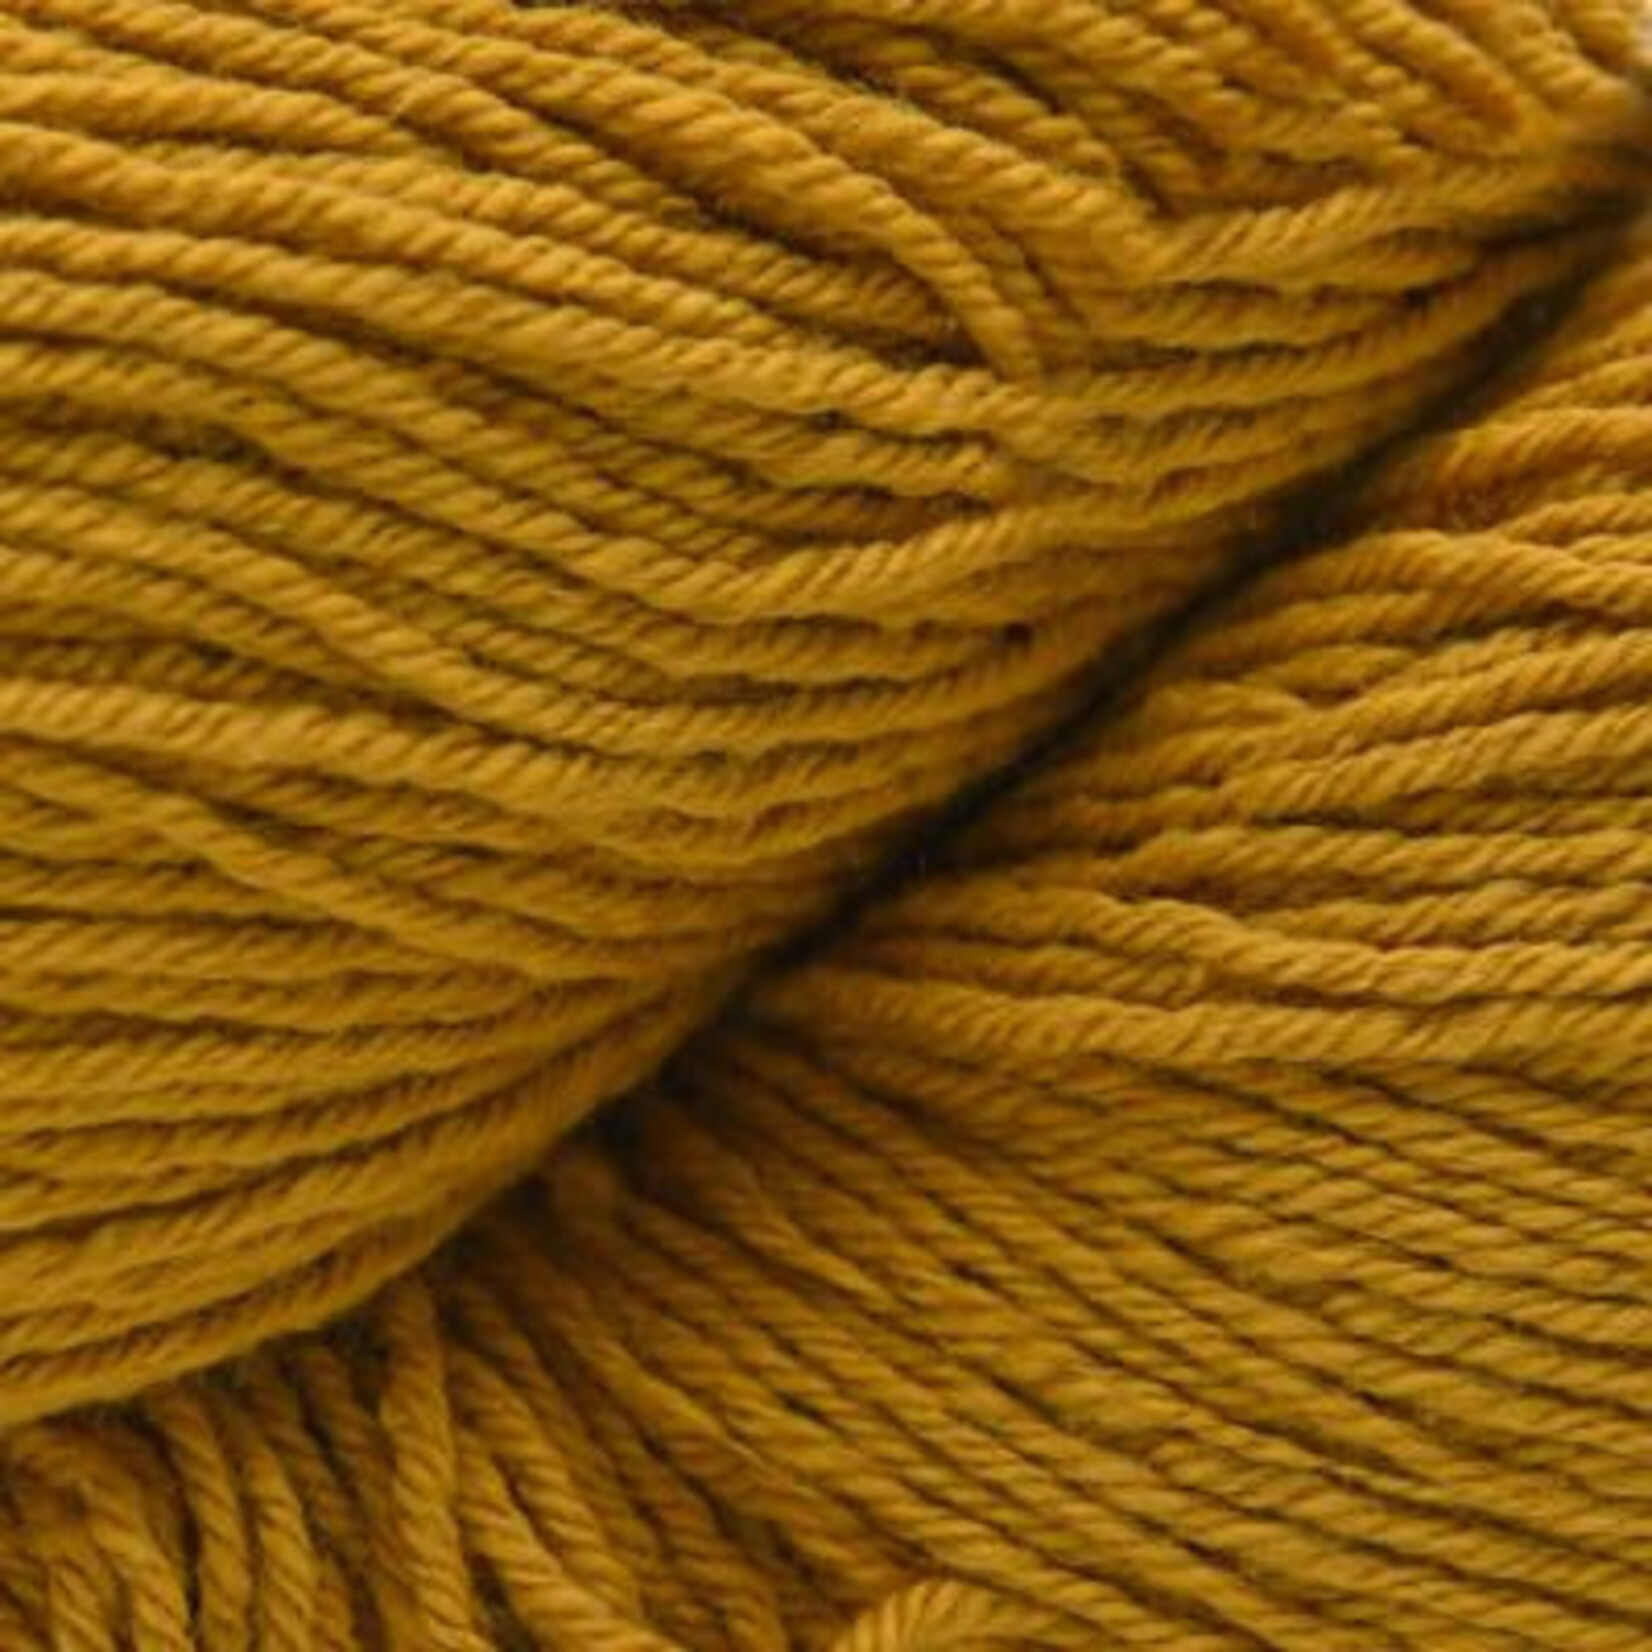 Cascade Cotton Sox by Cascade Yarns